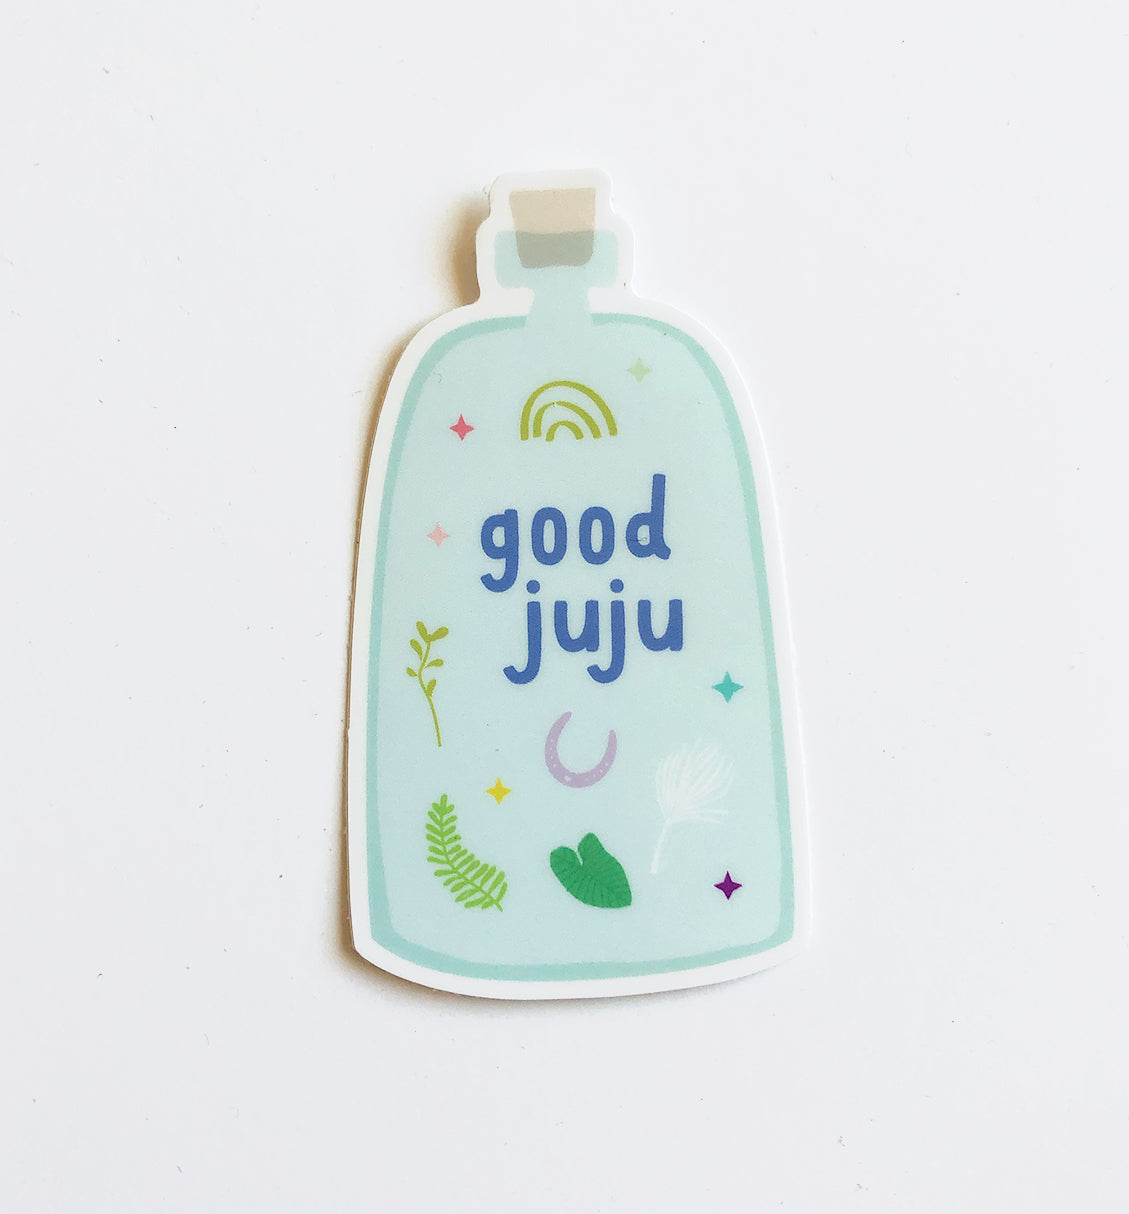 Good Juju sticker